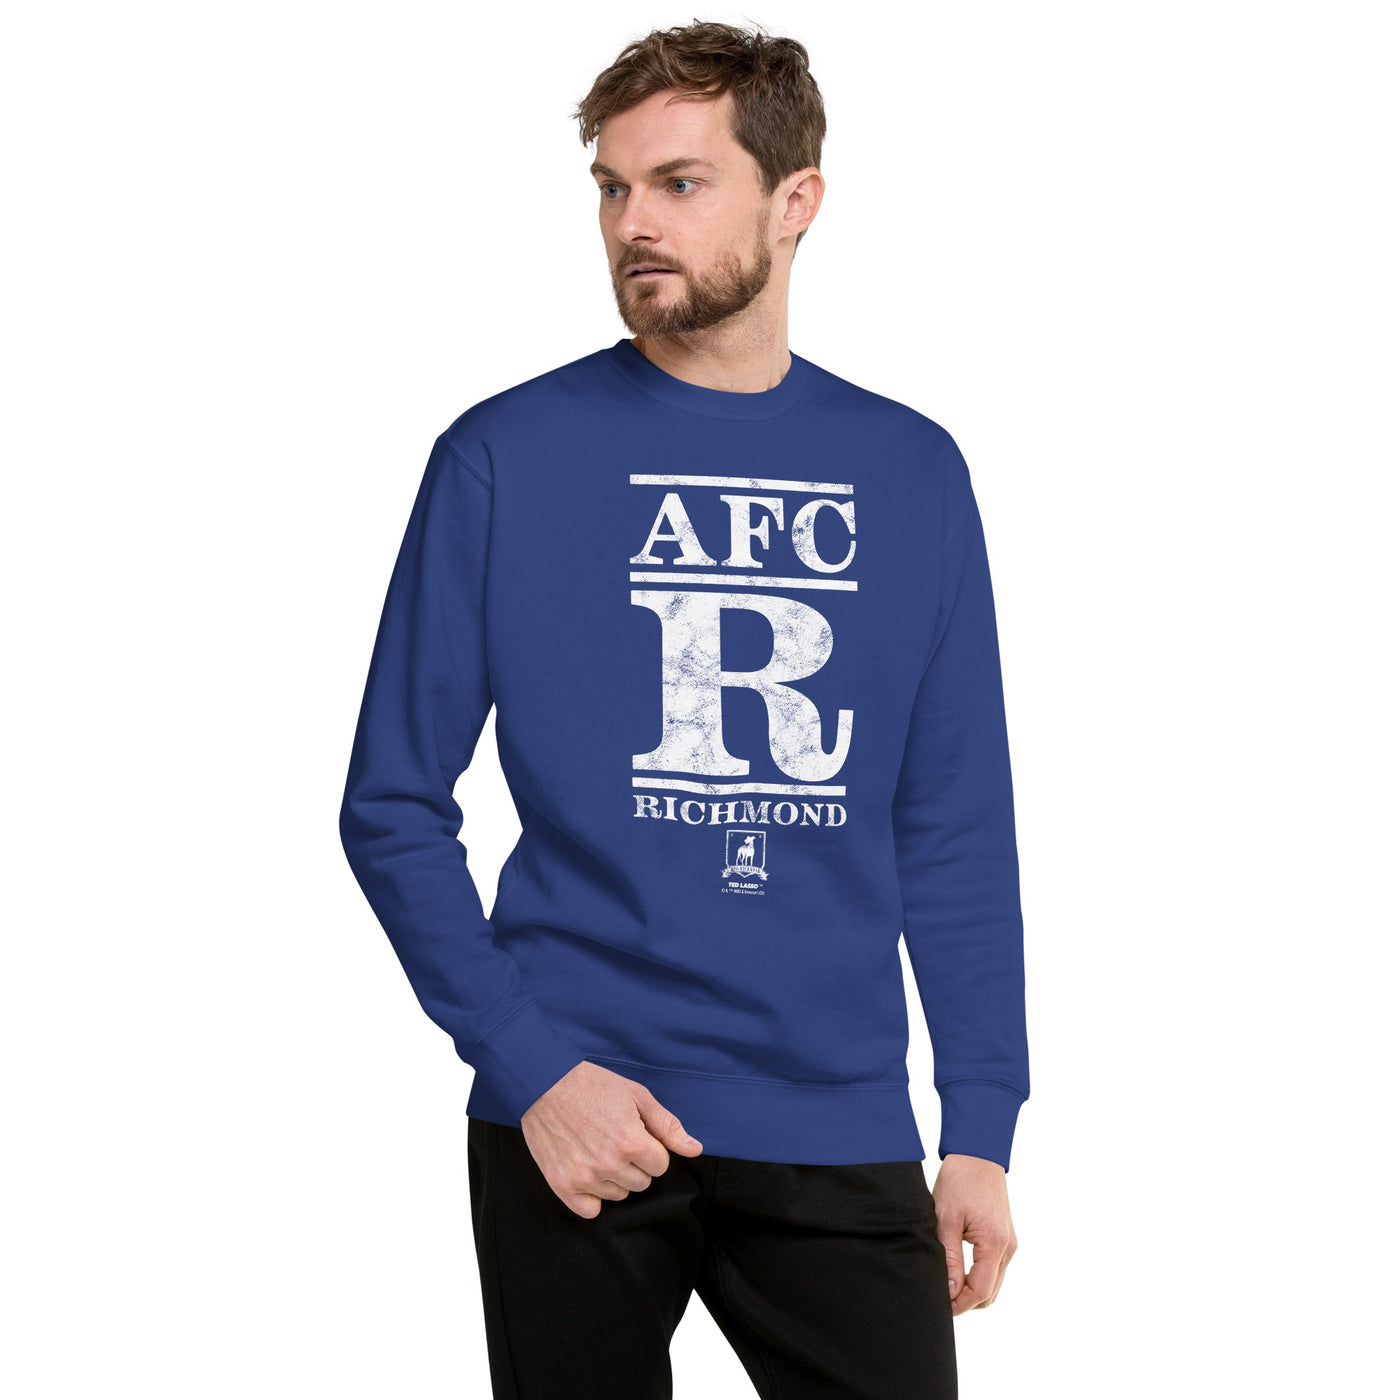 Ted Lasso A.F.C. Richmond Big R Fleece Crewneck Sweatshirt